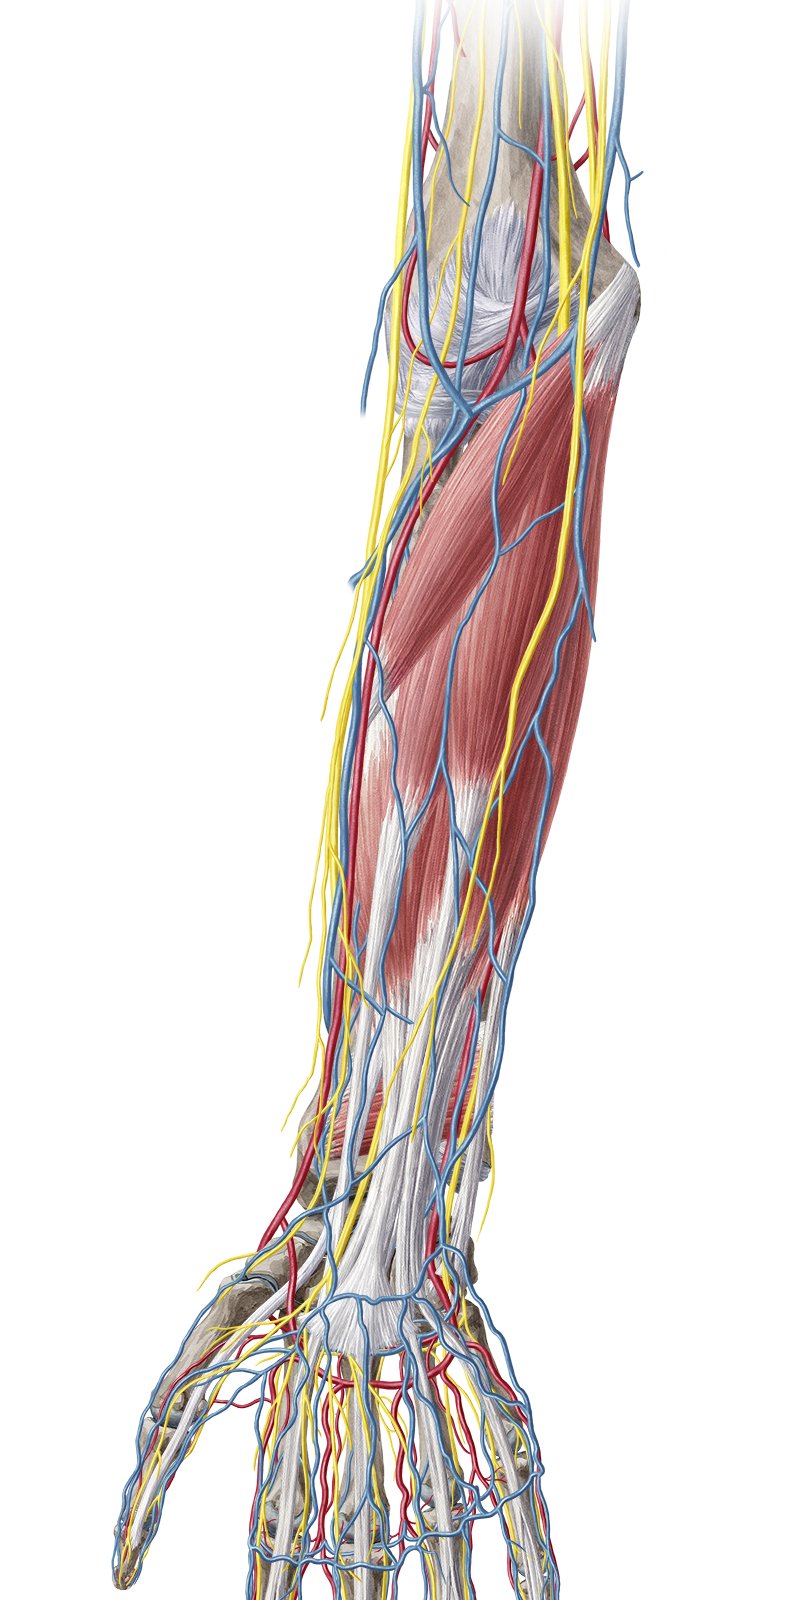 Elbow and forearm (Anatomy) - Study Guide | Kenhub